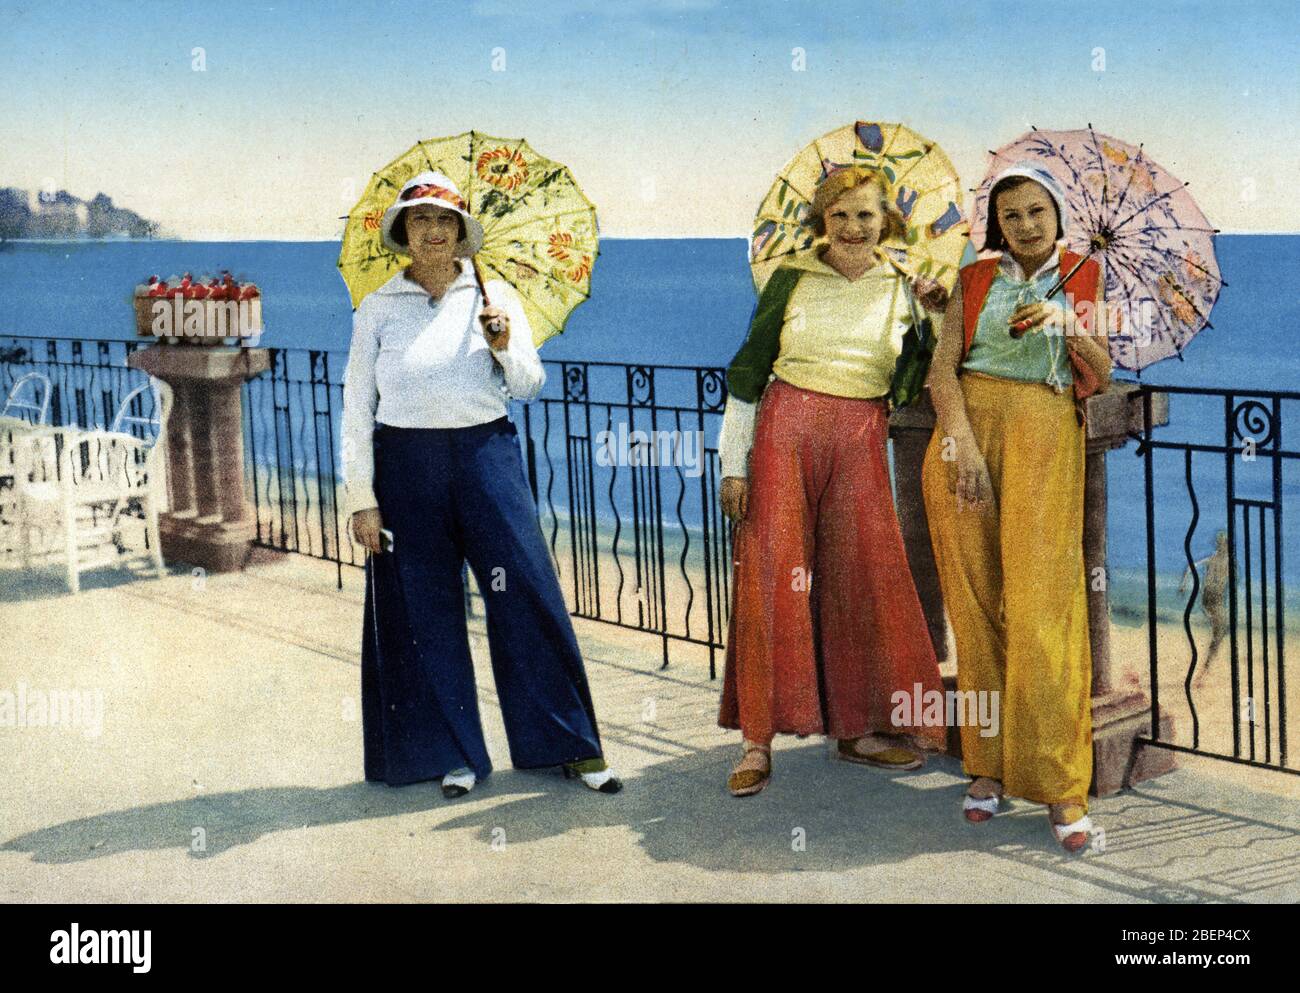 Jeunes femmes vetues a la Mode Pyjama dans les annees 1930, Juan les Pins, (Frauen tragen Pyjamas in den 1930er Jahren) Carte postale Collection privee Stockfoto